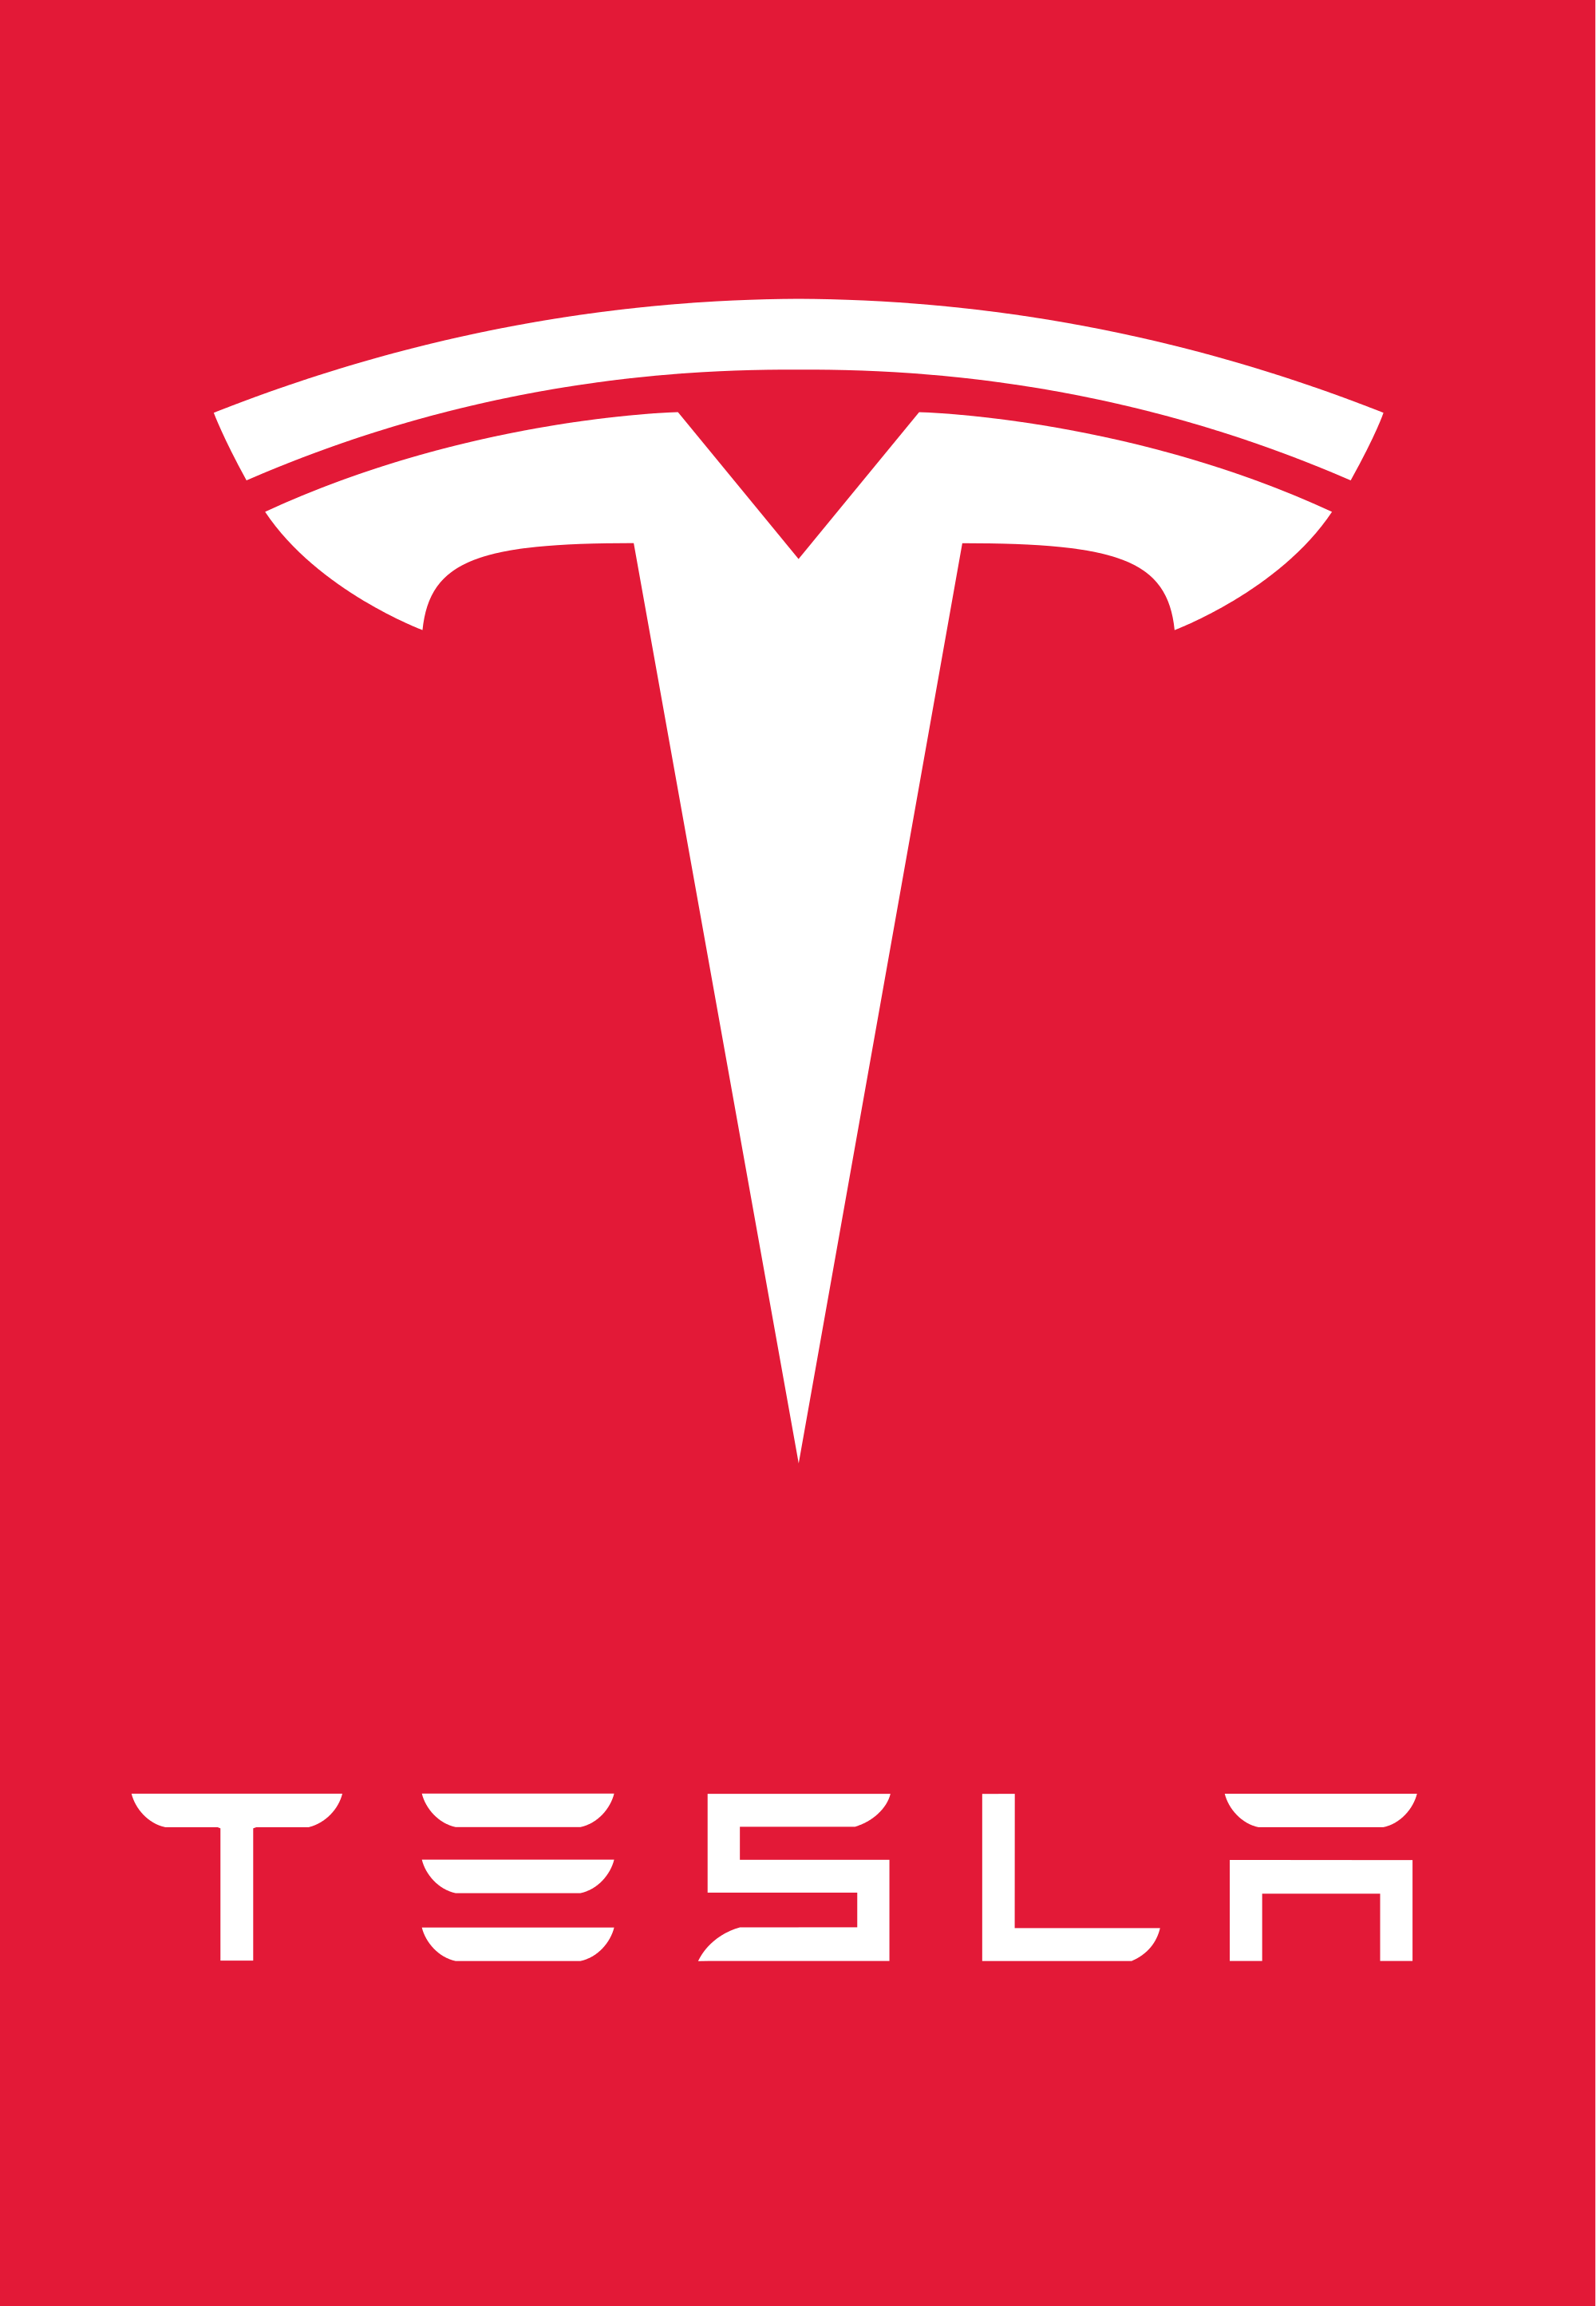 Tesla Brand Logo - Tesla Logo, Tesla Car Symbol Meaning and History | Car Brand Names.com